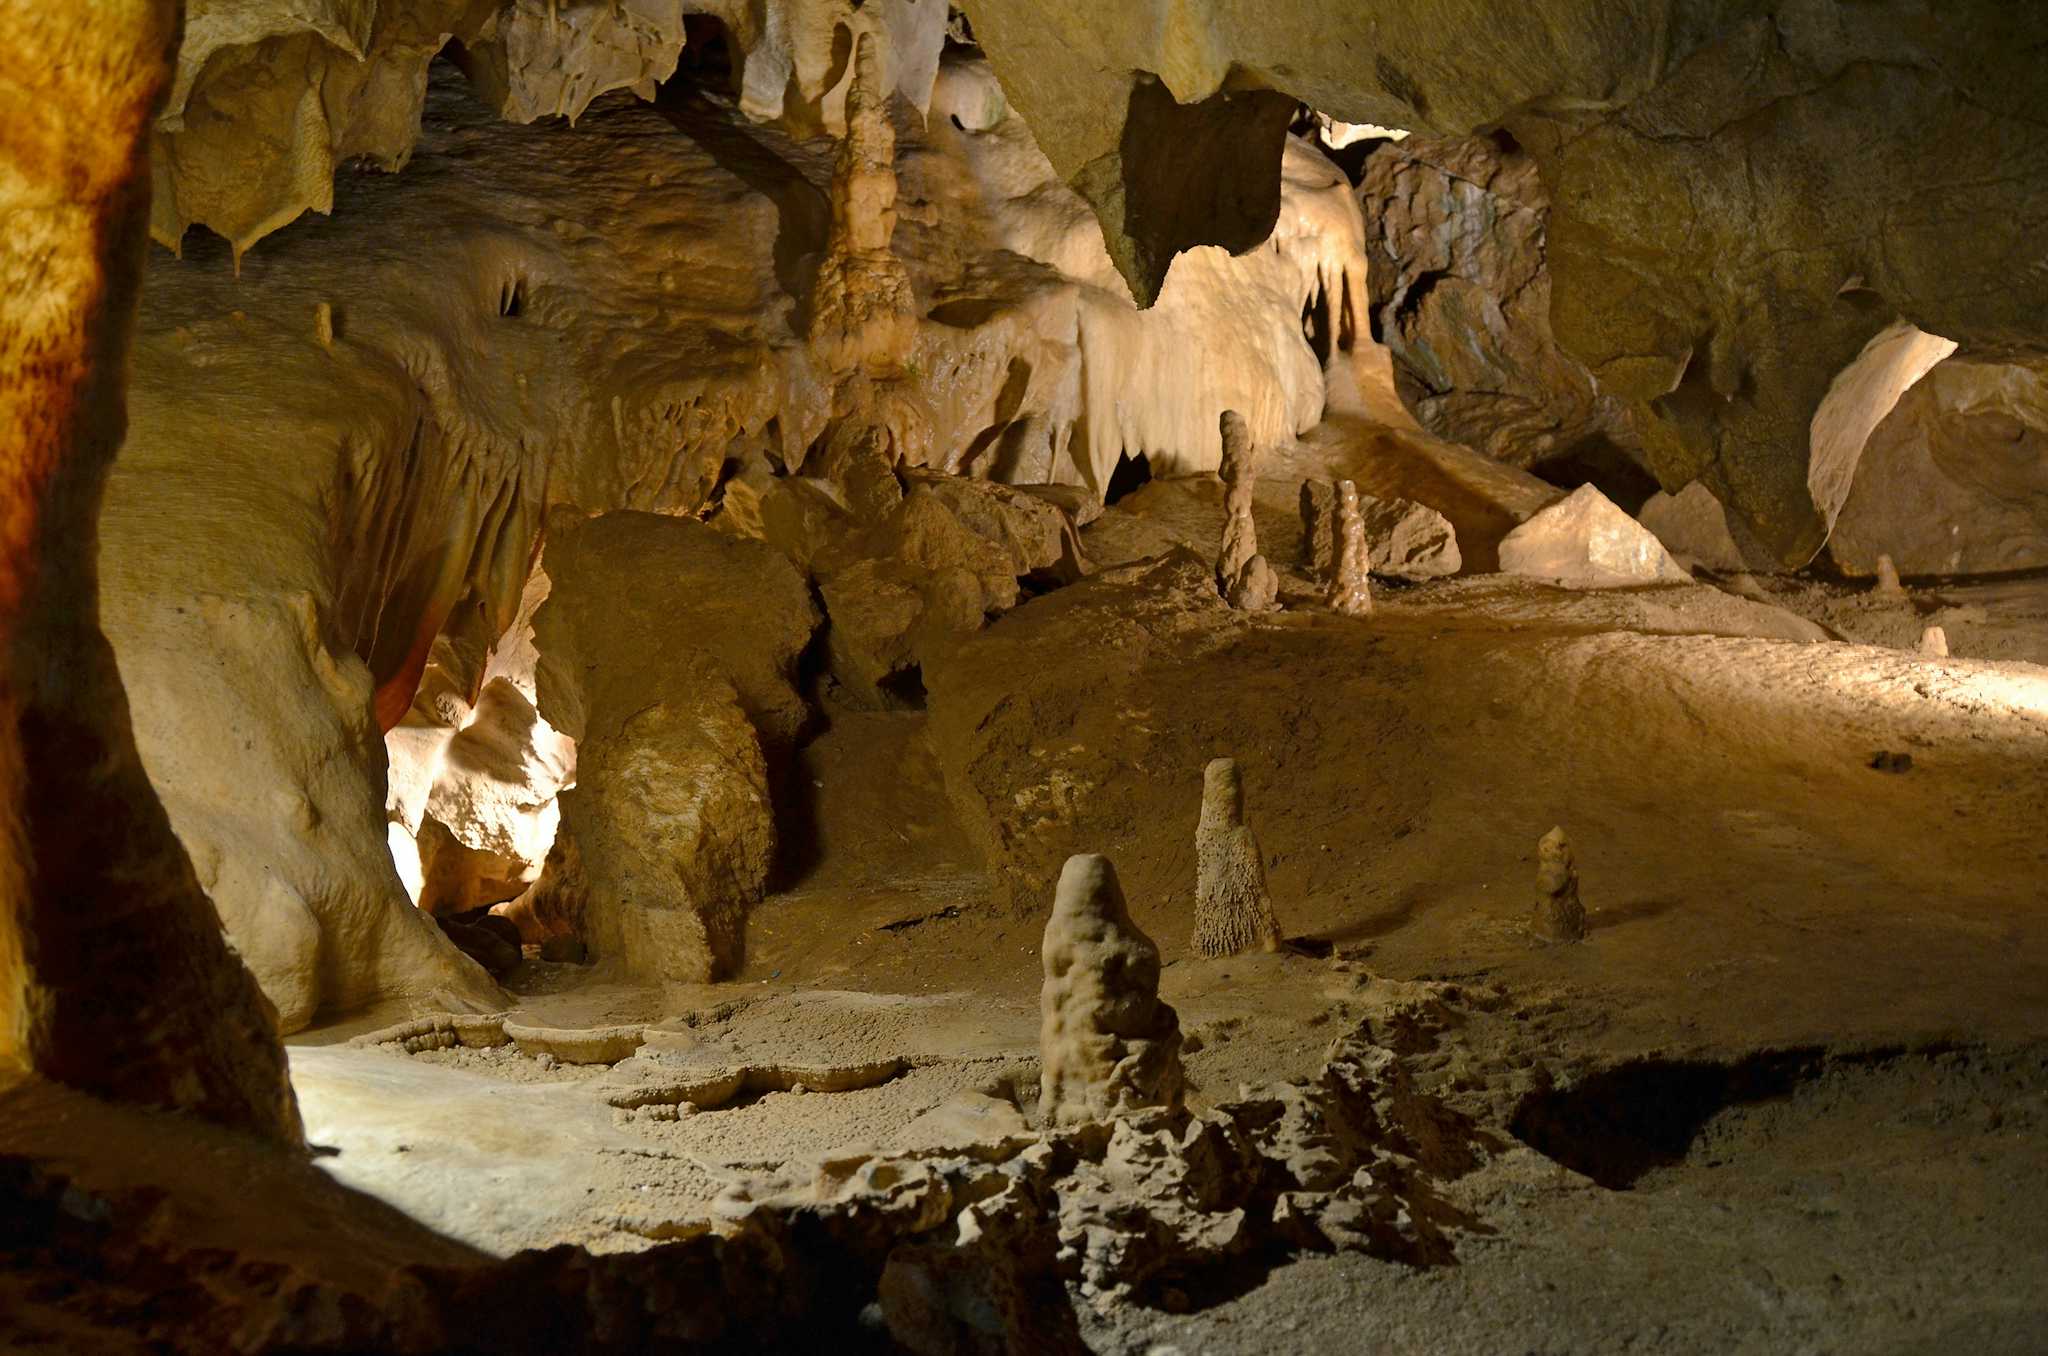 Koneprusy Cave